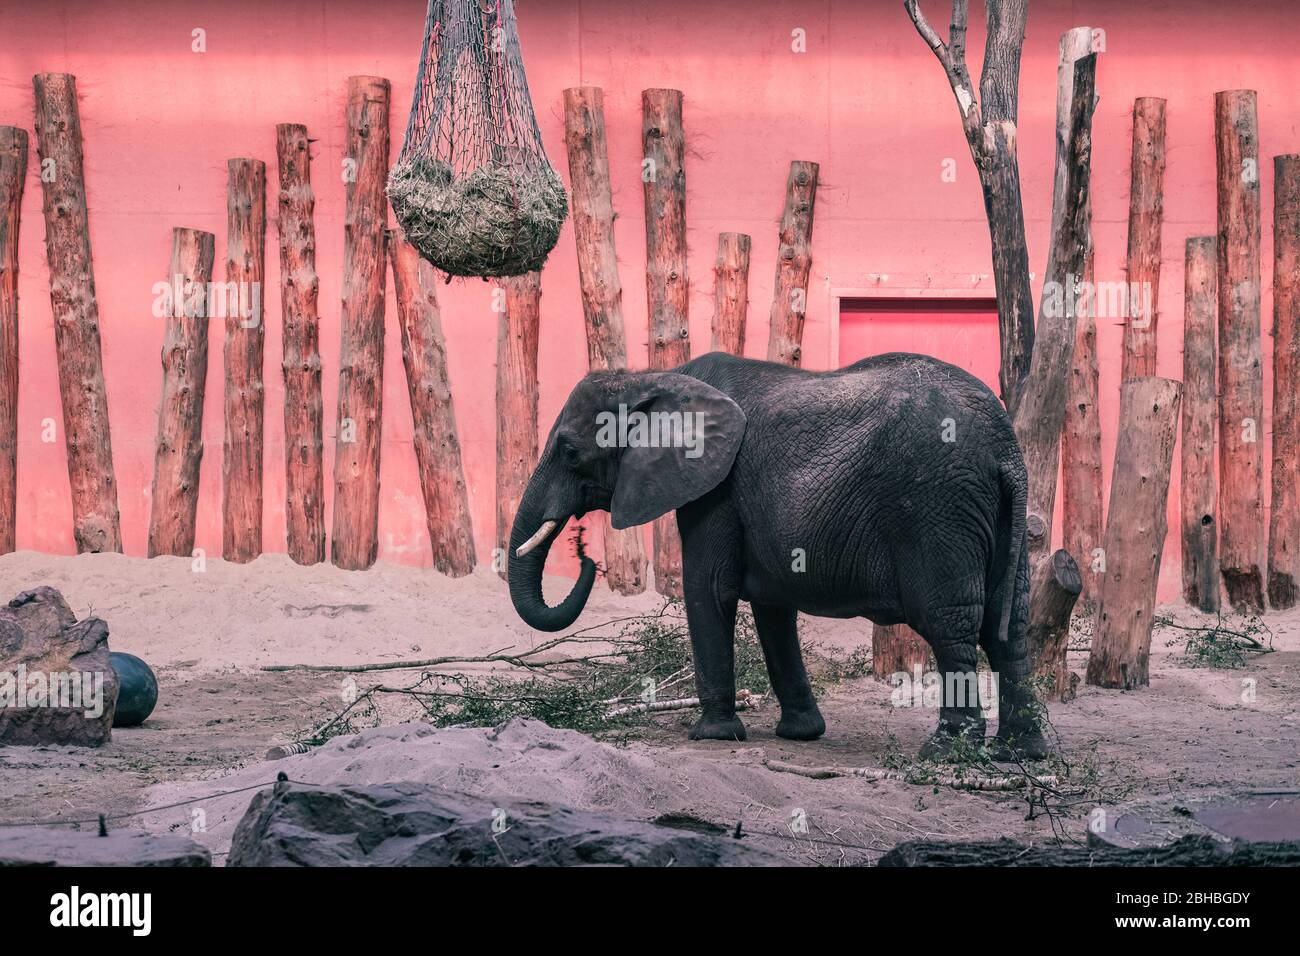 African elephant (Loxodonta africana) in Beekse Bergen Zoo, The Netherlands, Europe. Stock Photo